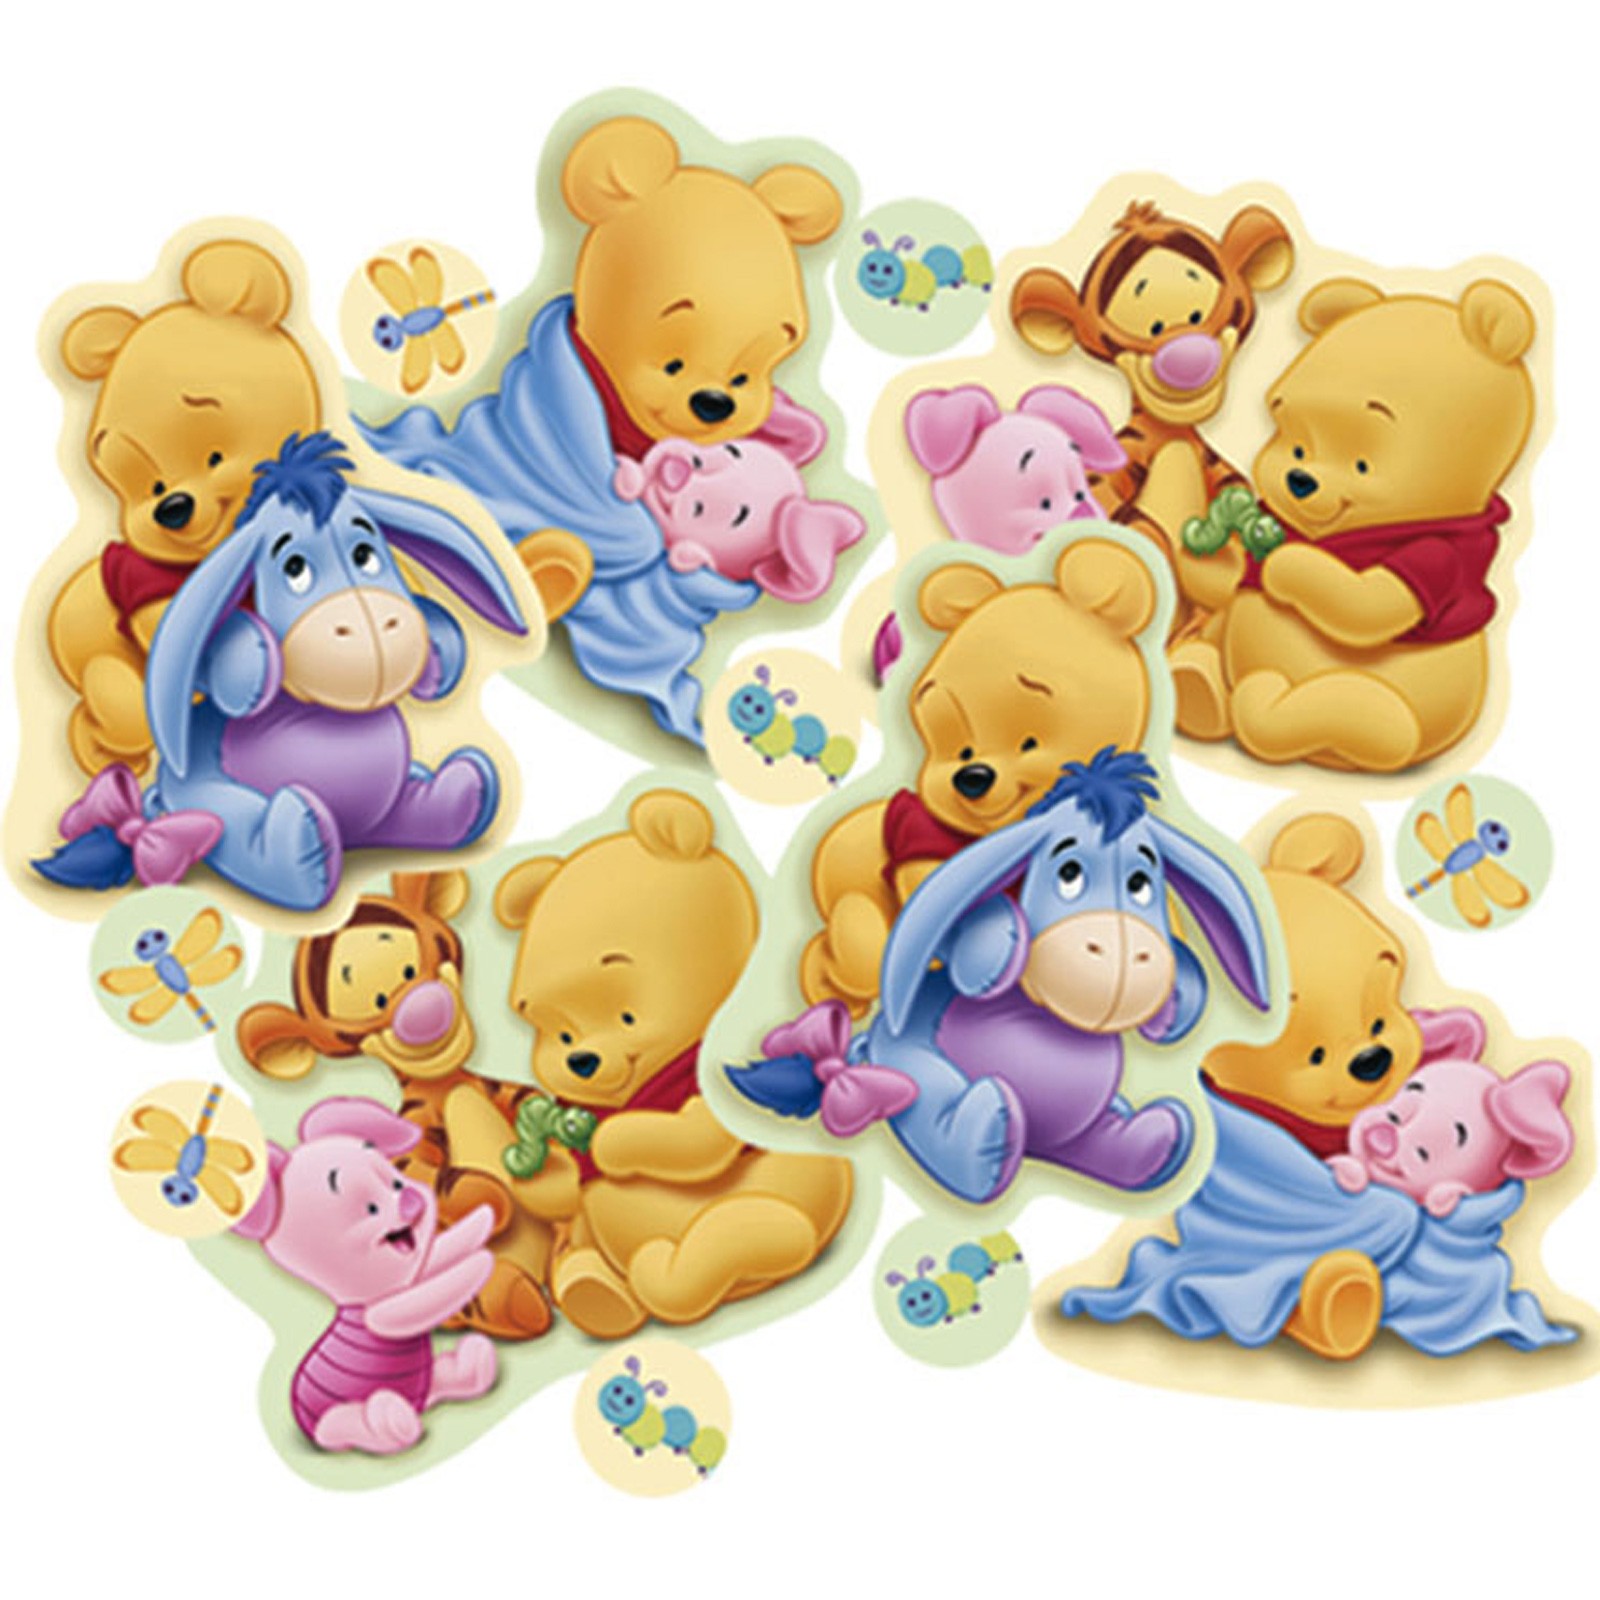 Pooh Bear Wallpaper - Baby Pooh Bear And Friends - HD Wallpaper 